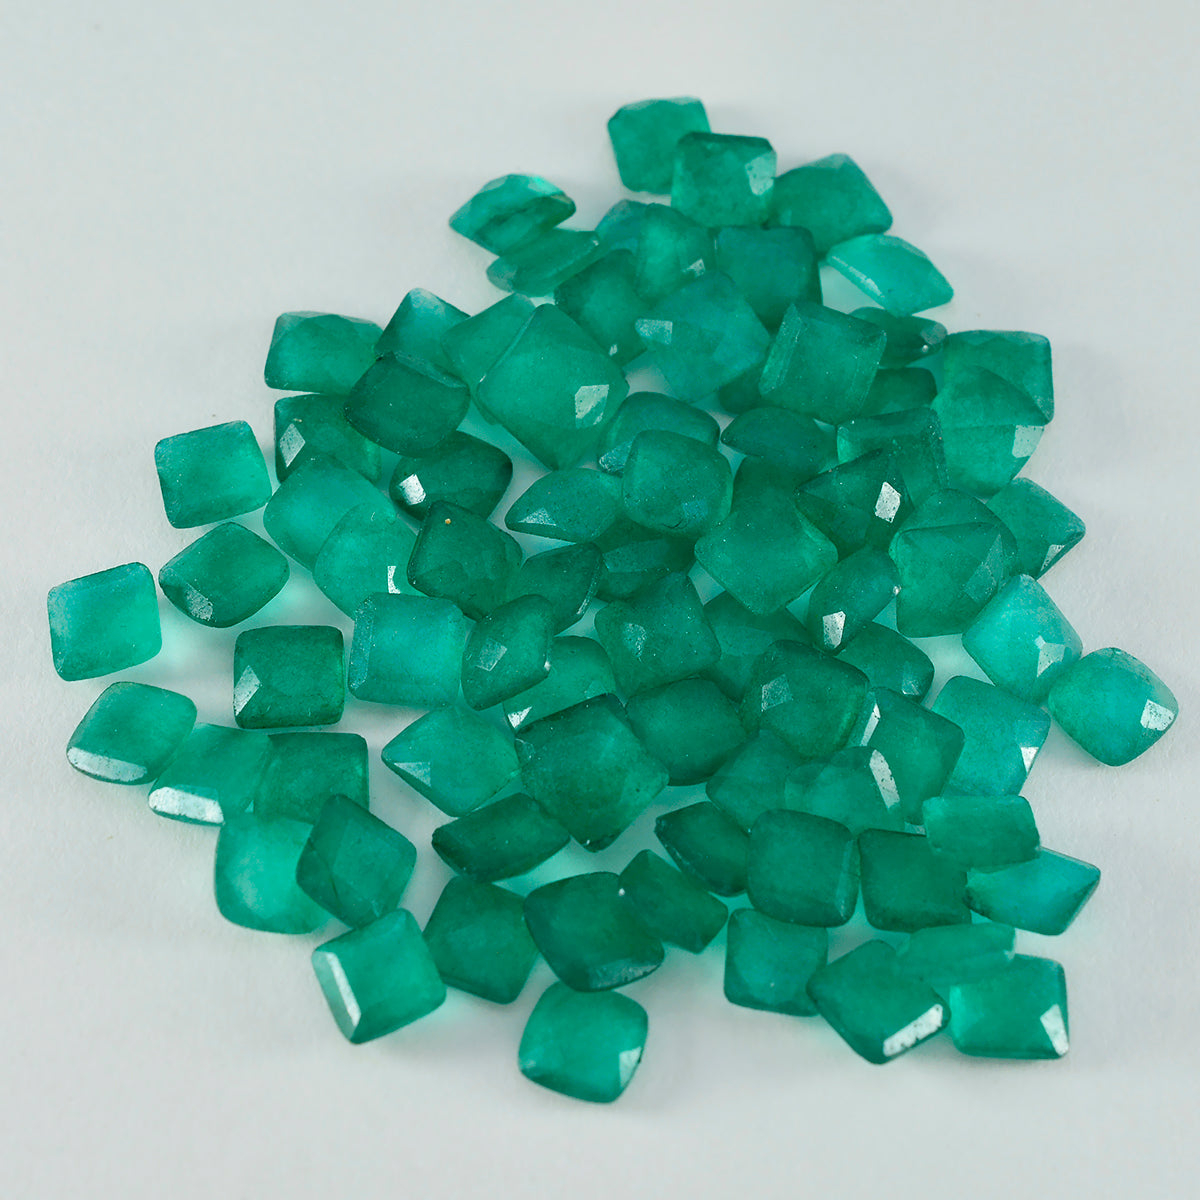 riyogems 1pc ナチュラル グリーン ジャスパー ファセット 6x6 mm 正方形の形状の甘い品質の宝石